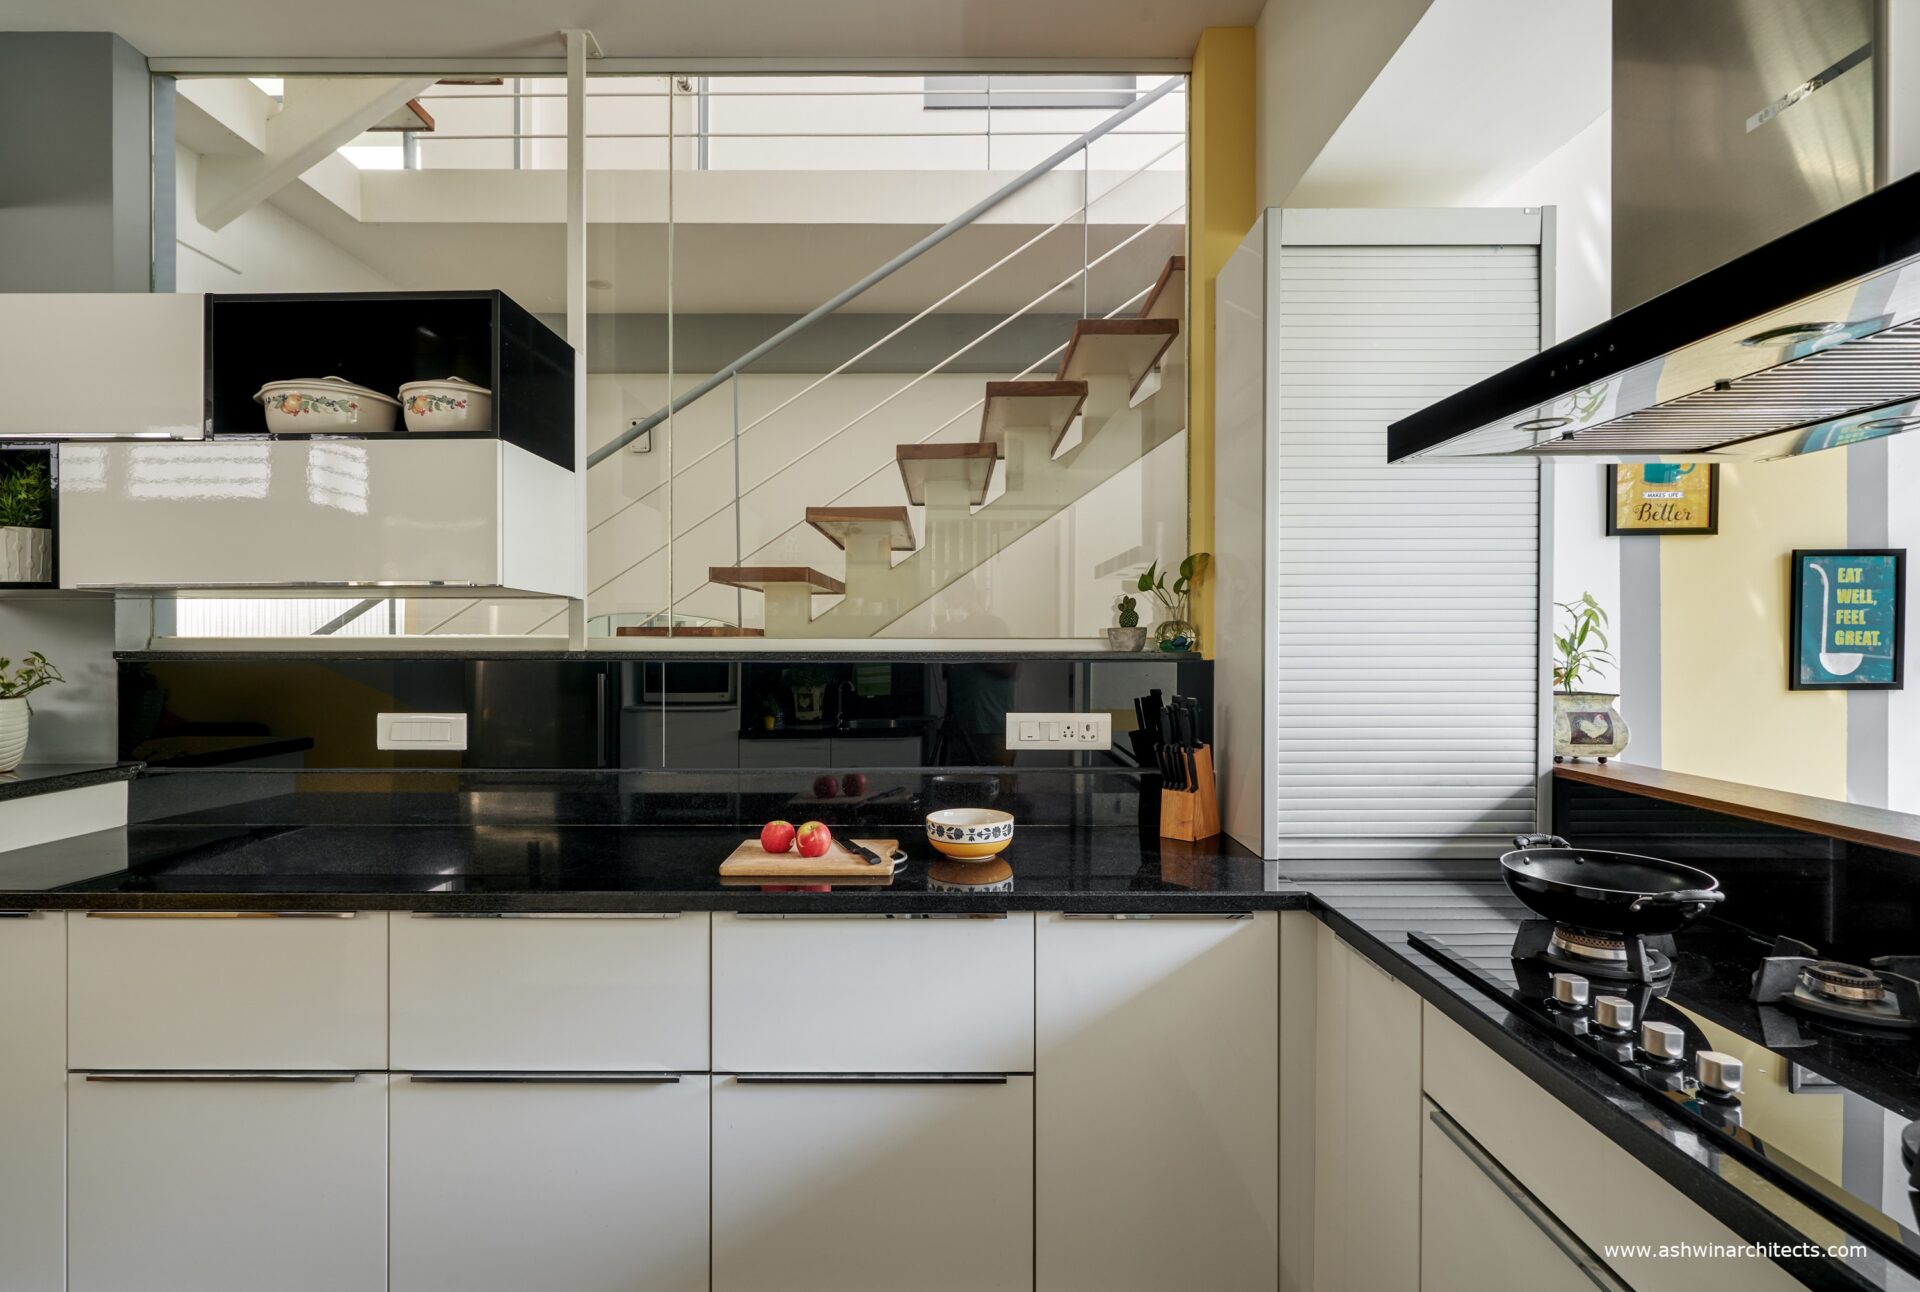 40x60-plot-Kitchen-Space-Kailash-Residence-40-x-60-Plot-3BHK-Duplex-Bungalow-3500-sft.-Family-Home-Design